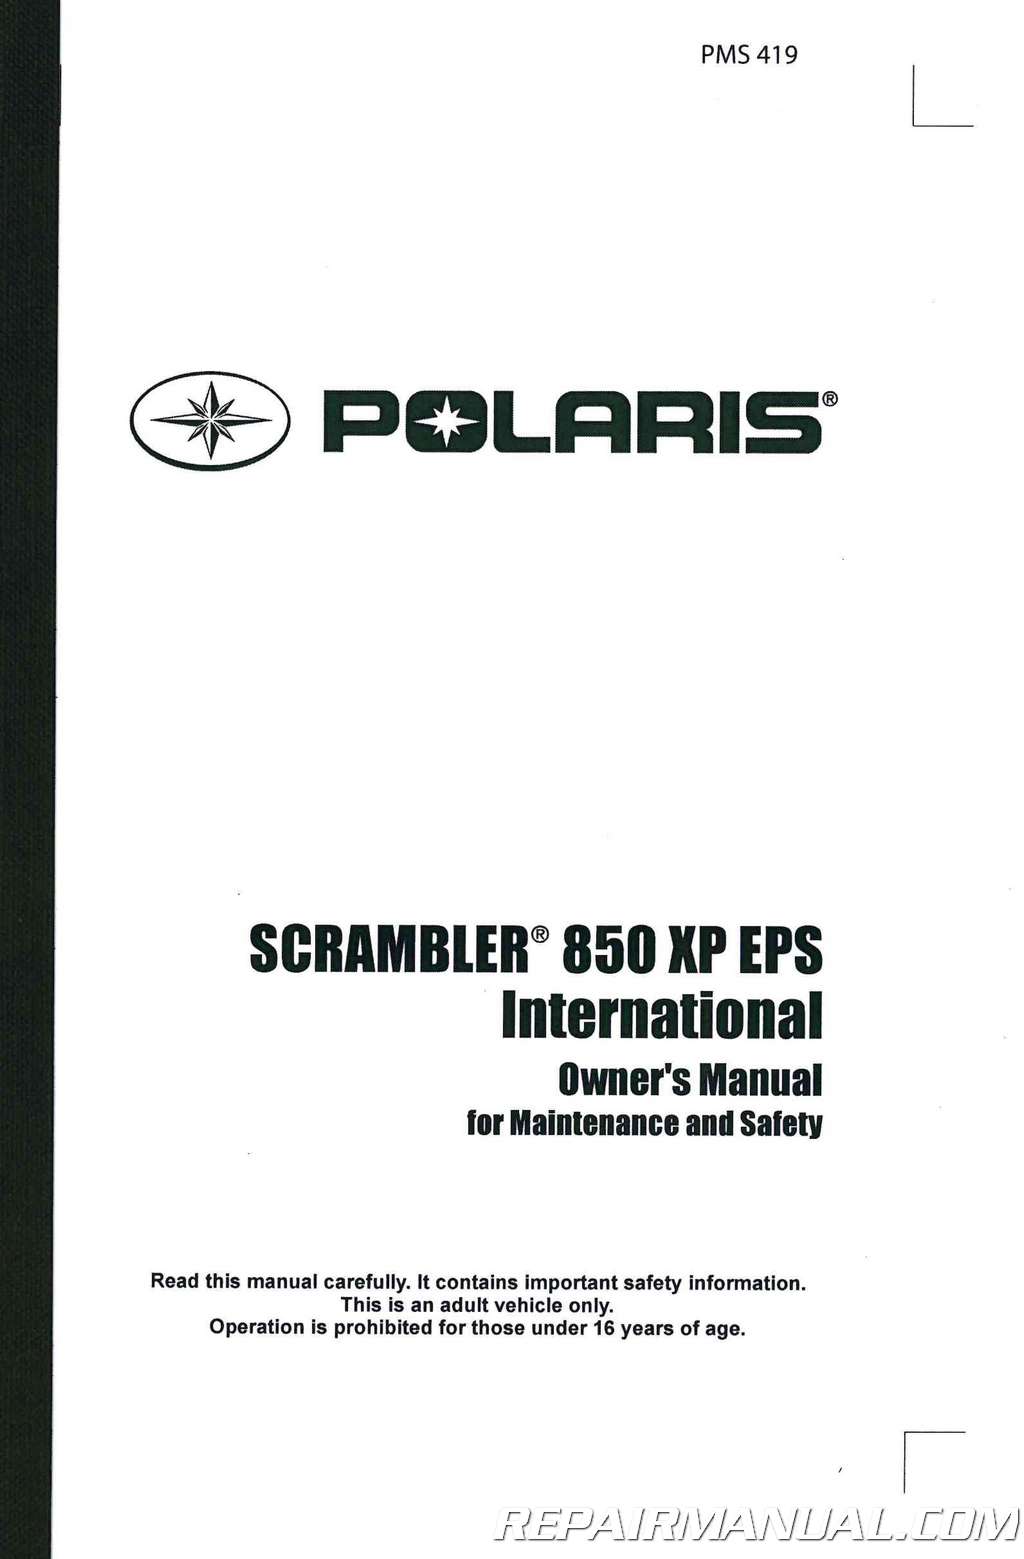 2014 Polaris Scrambler 850 XP EPS International Owners Manual